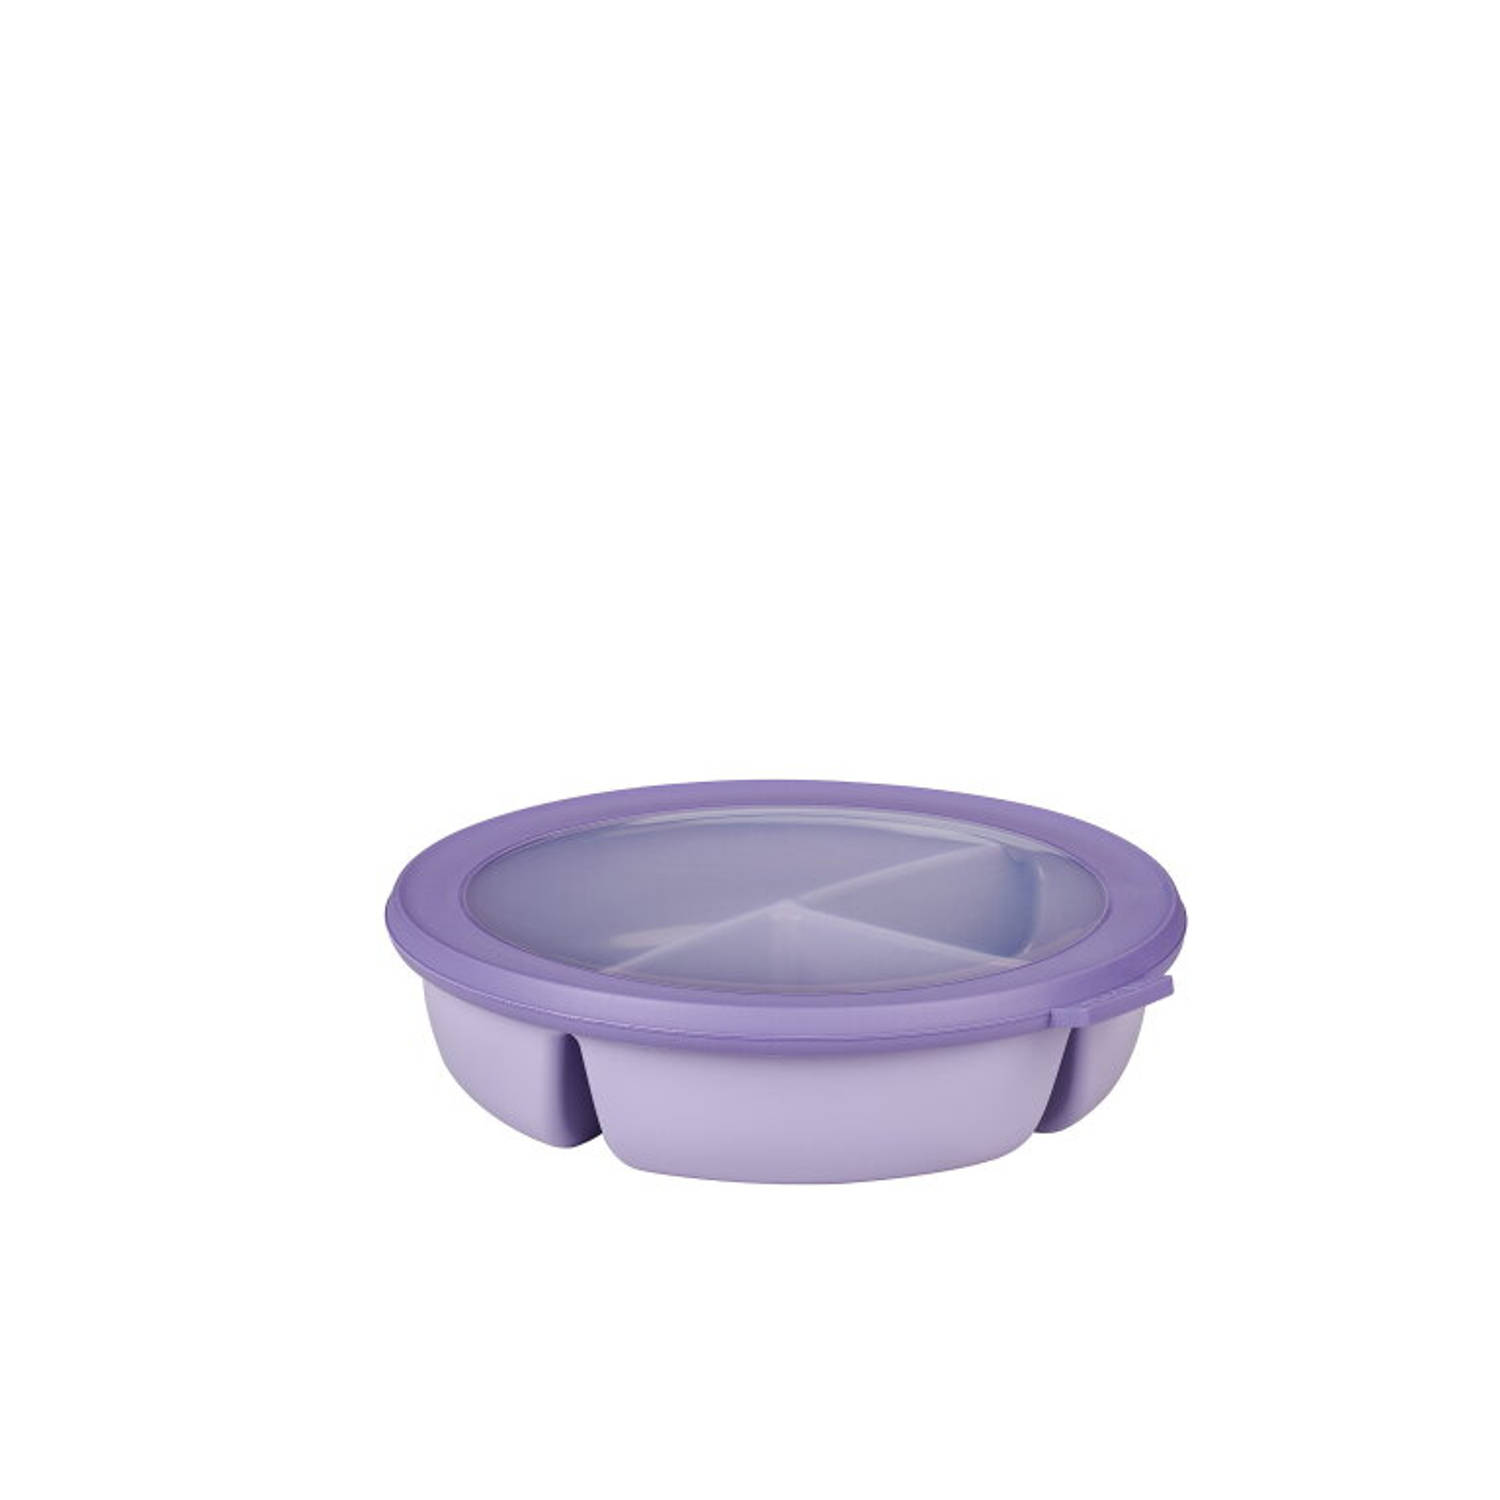 Mepal - Multikom Cirqula vershouddoos - 3-vaks bento bowl - 250 ml, 250 ml & 500 ml - Rond - Vivid lilac